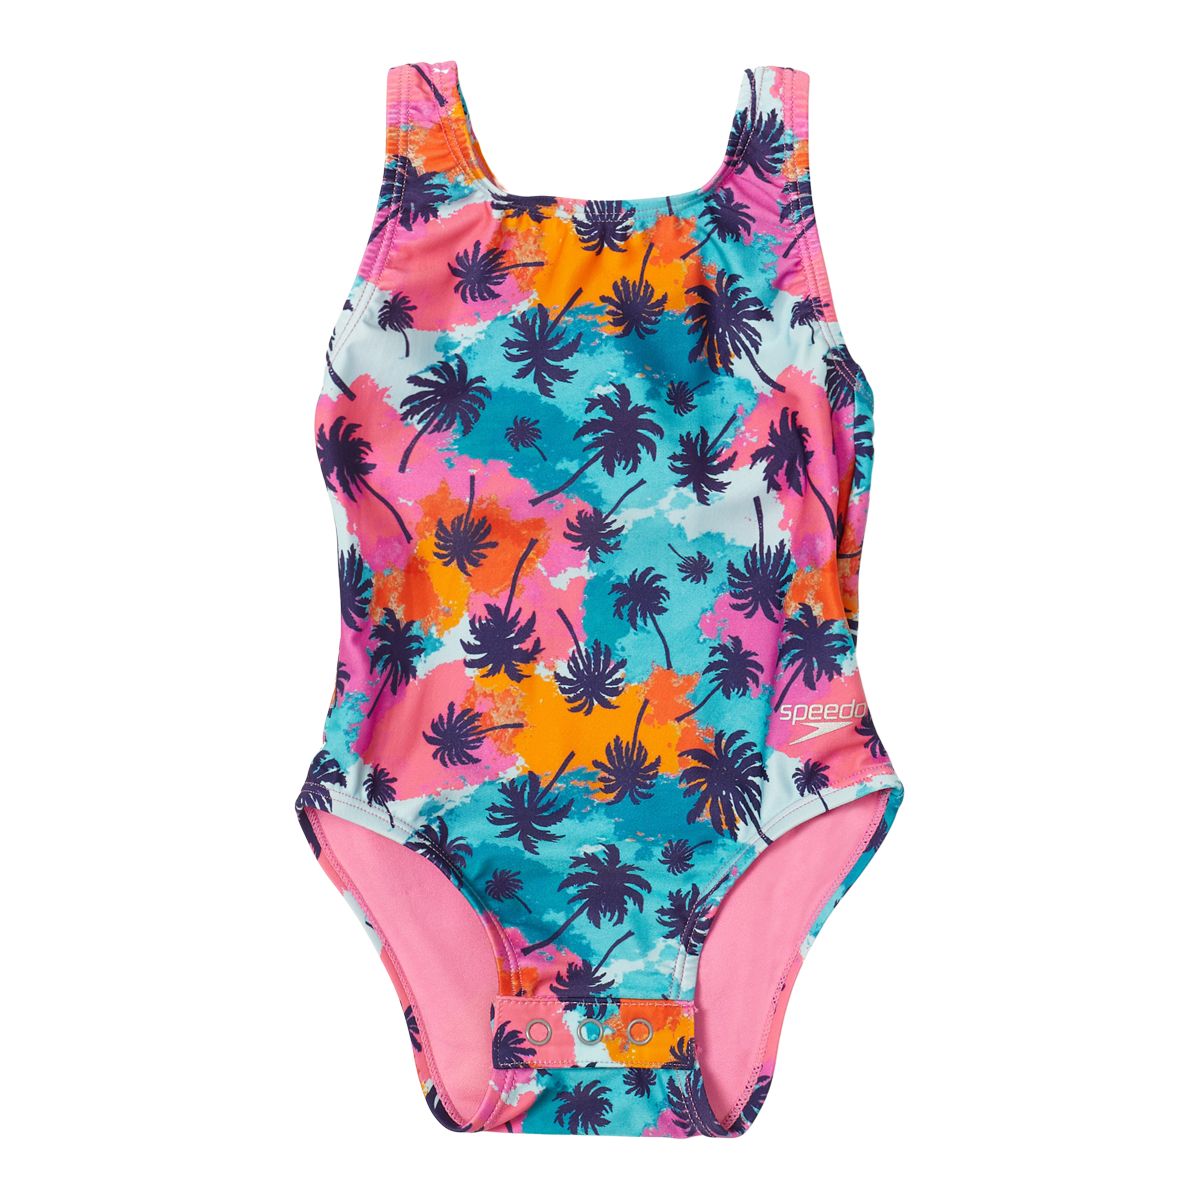 Speedo Infant Girls' 12M-3T Snapsuit One Piece Swimsuit